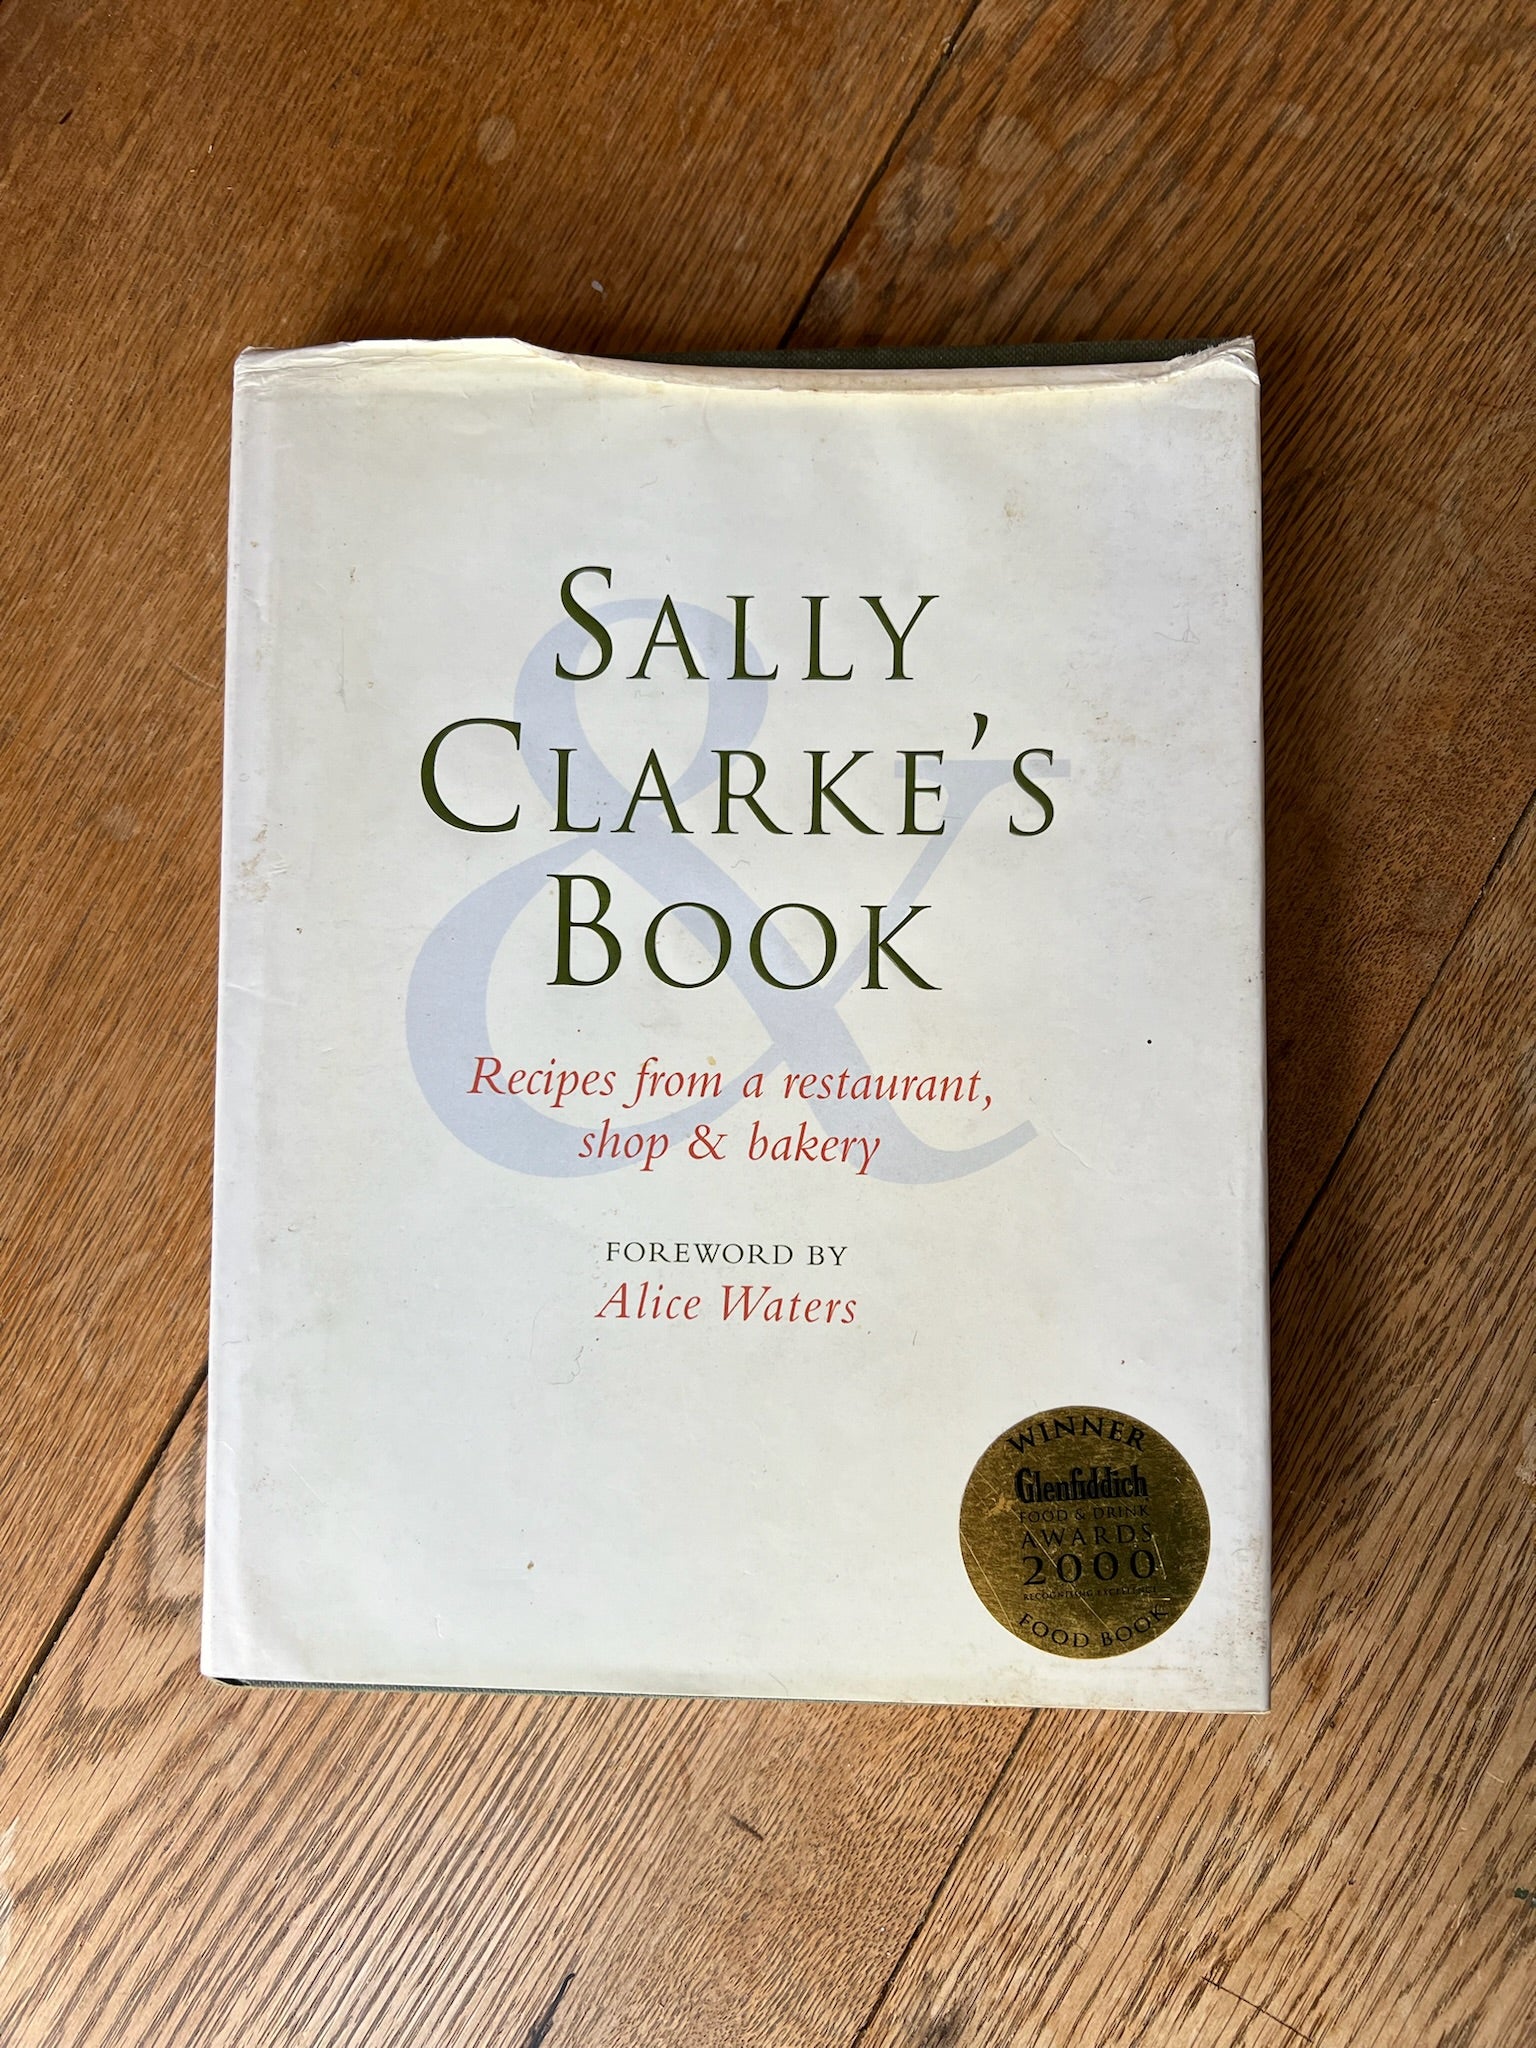 ”SALLY CLARKE’S BOOK”